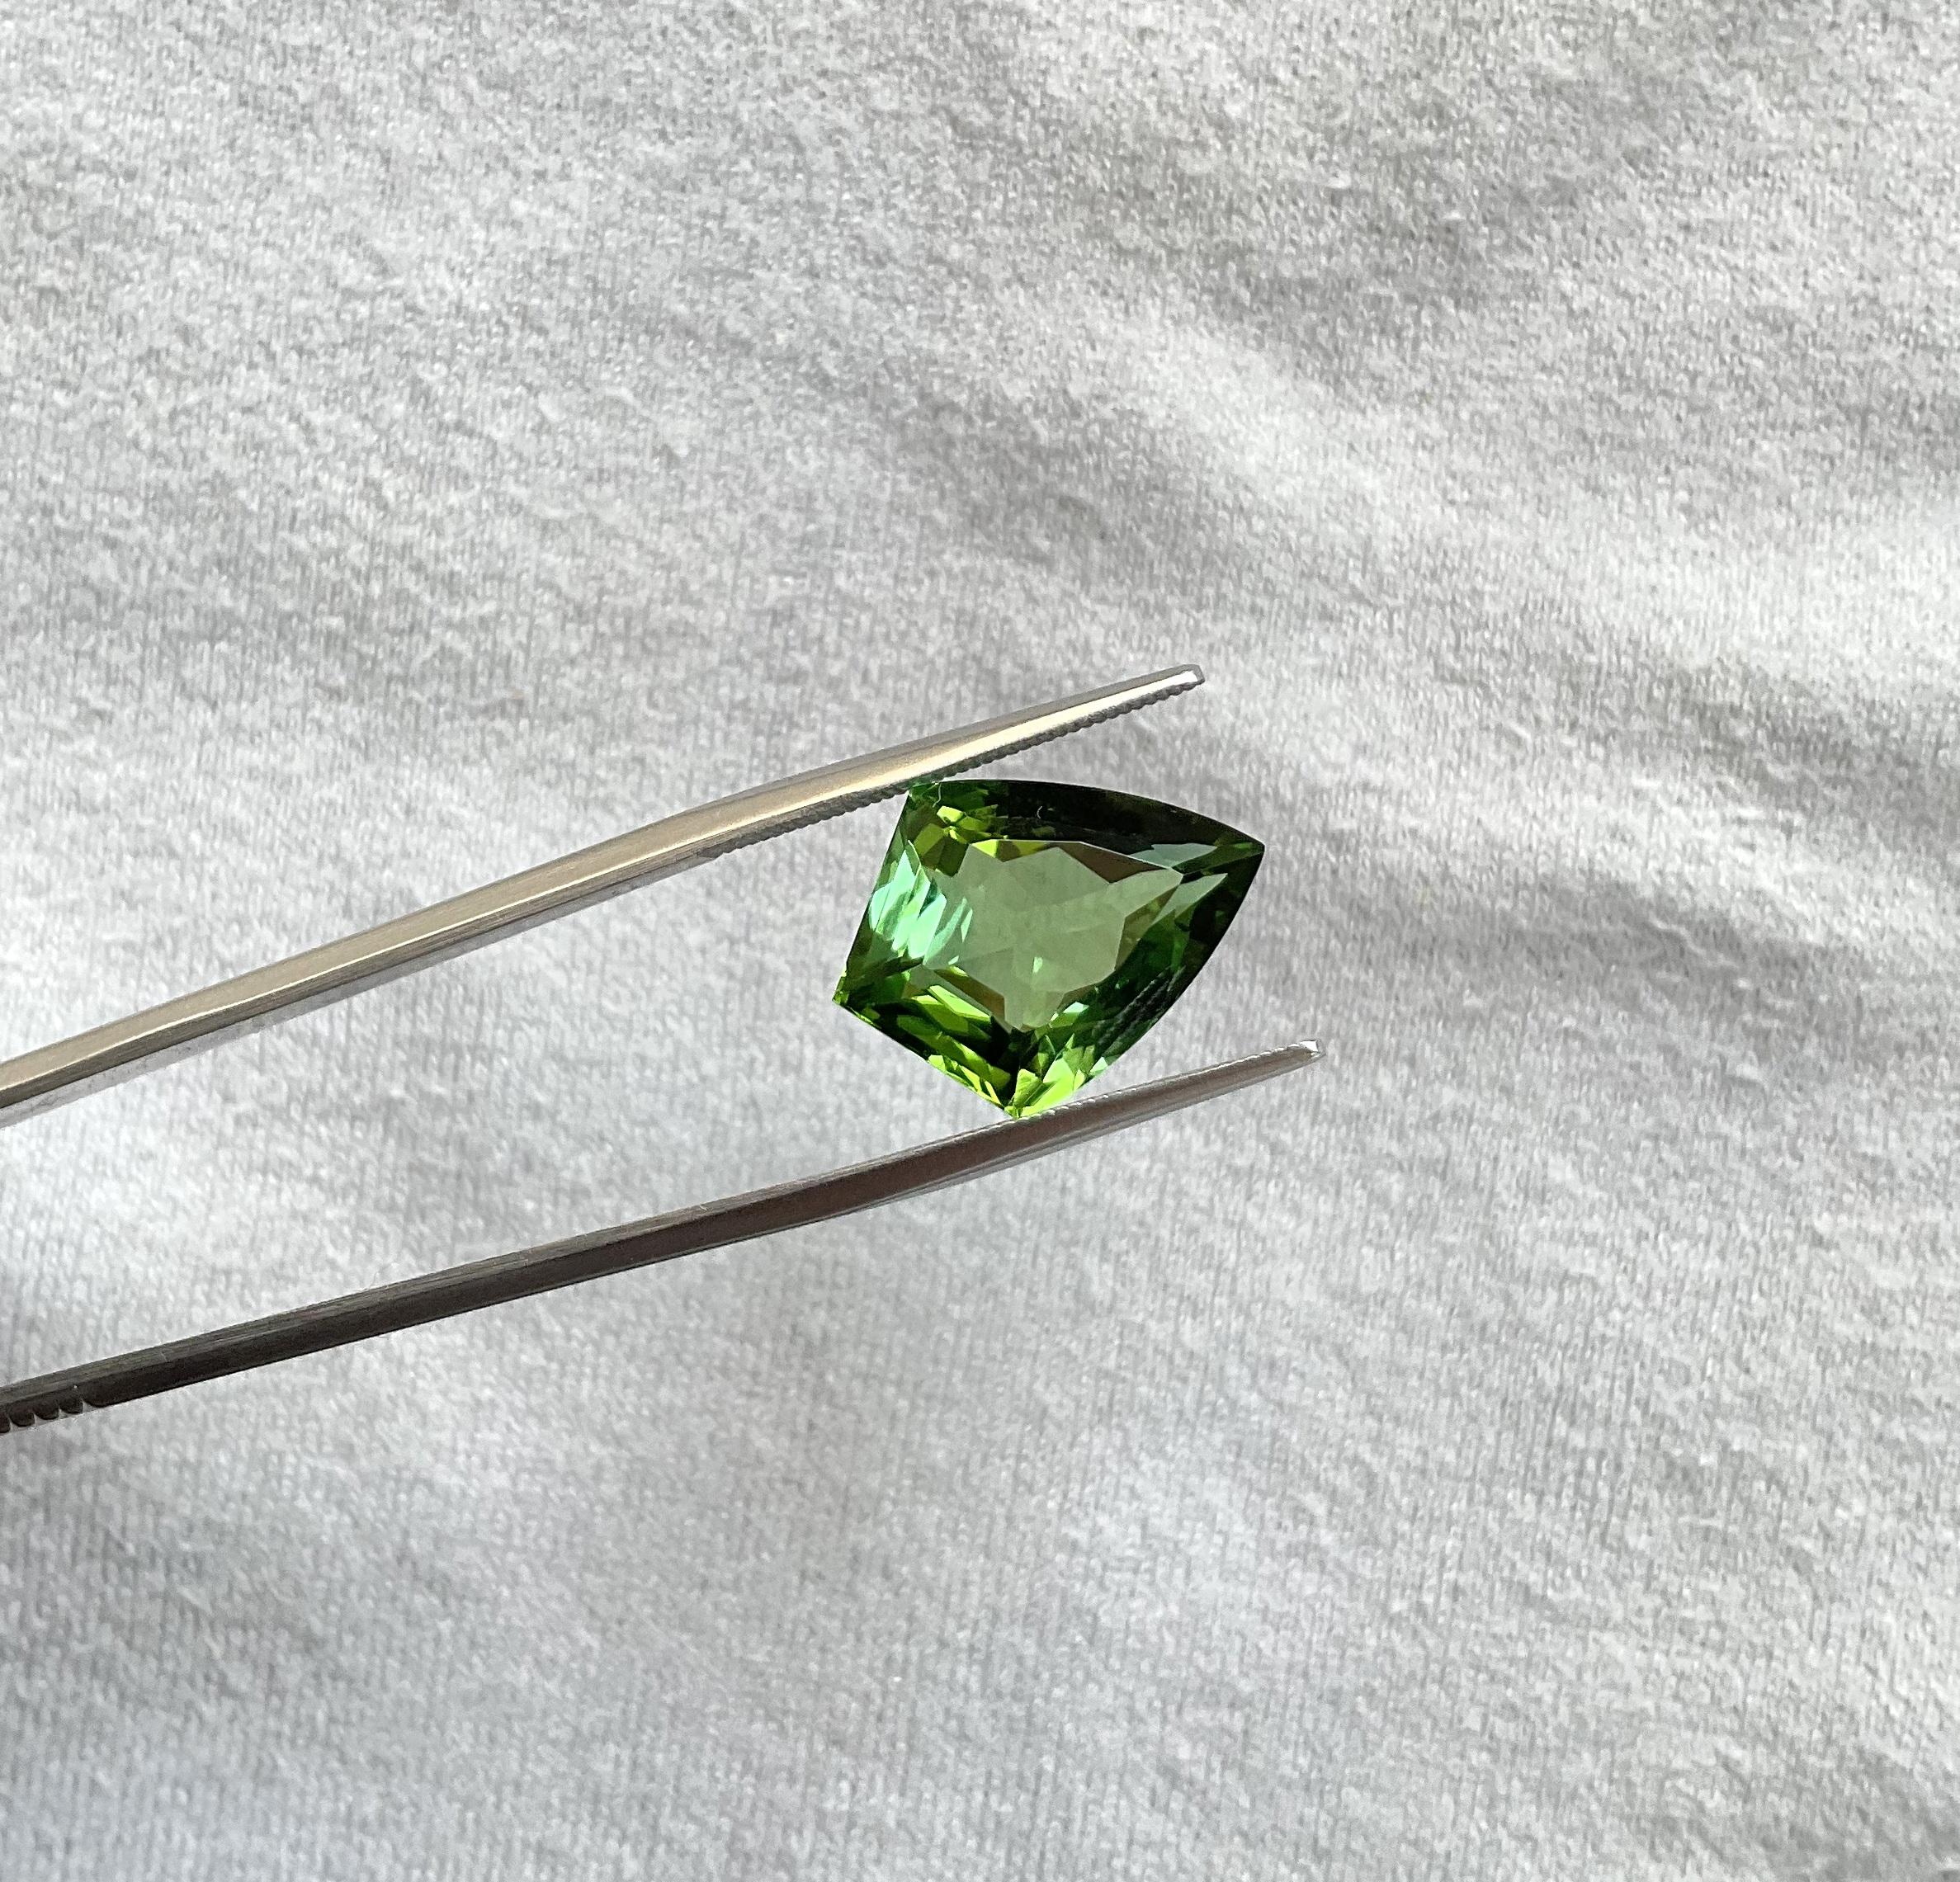 8.51 Carats Fine Green Tourmaline Shield Cutstone Fine Jewelry Natural Gemstone 1